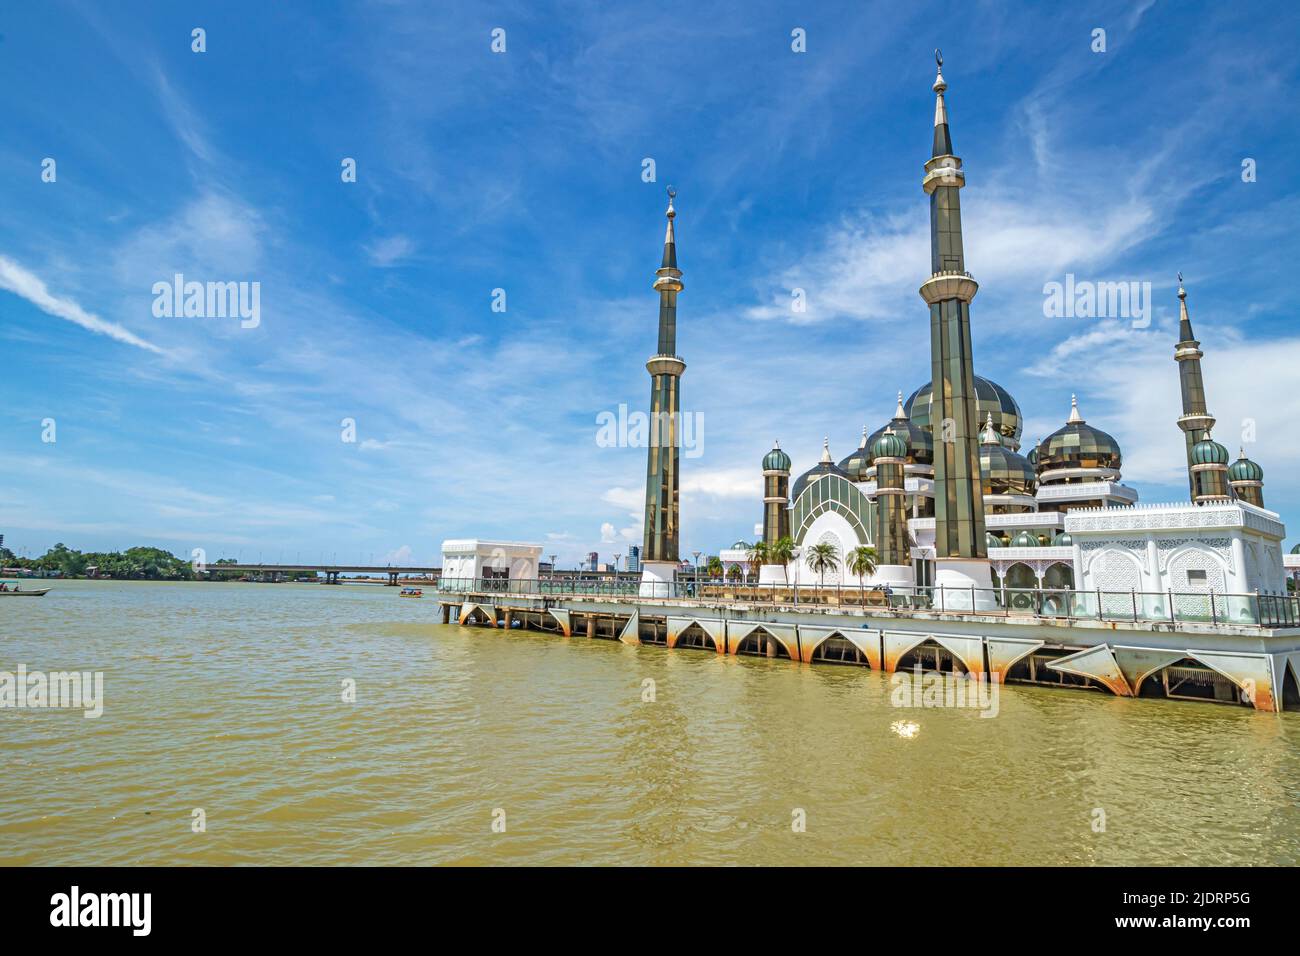 Die Masjid Kristal oder Kristallmoschee stand auf dem Wasser des Flusses Sungai Terengganu auf der Insel Pulau Wan man in Kuala Terengganu, Malaysia. Stockfoto